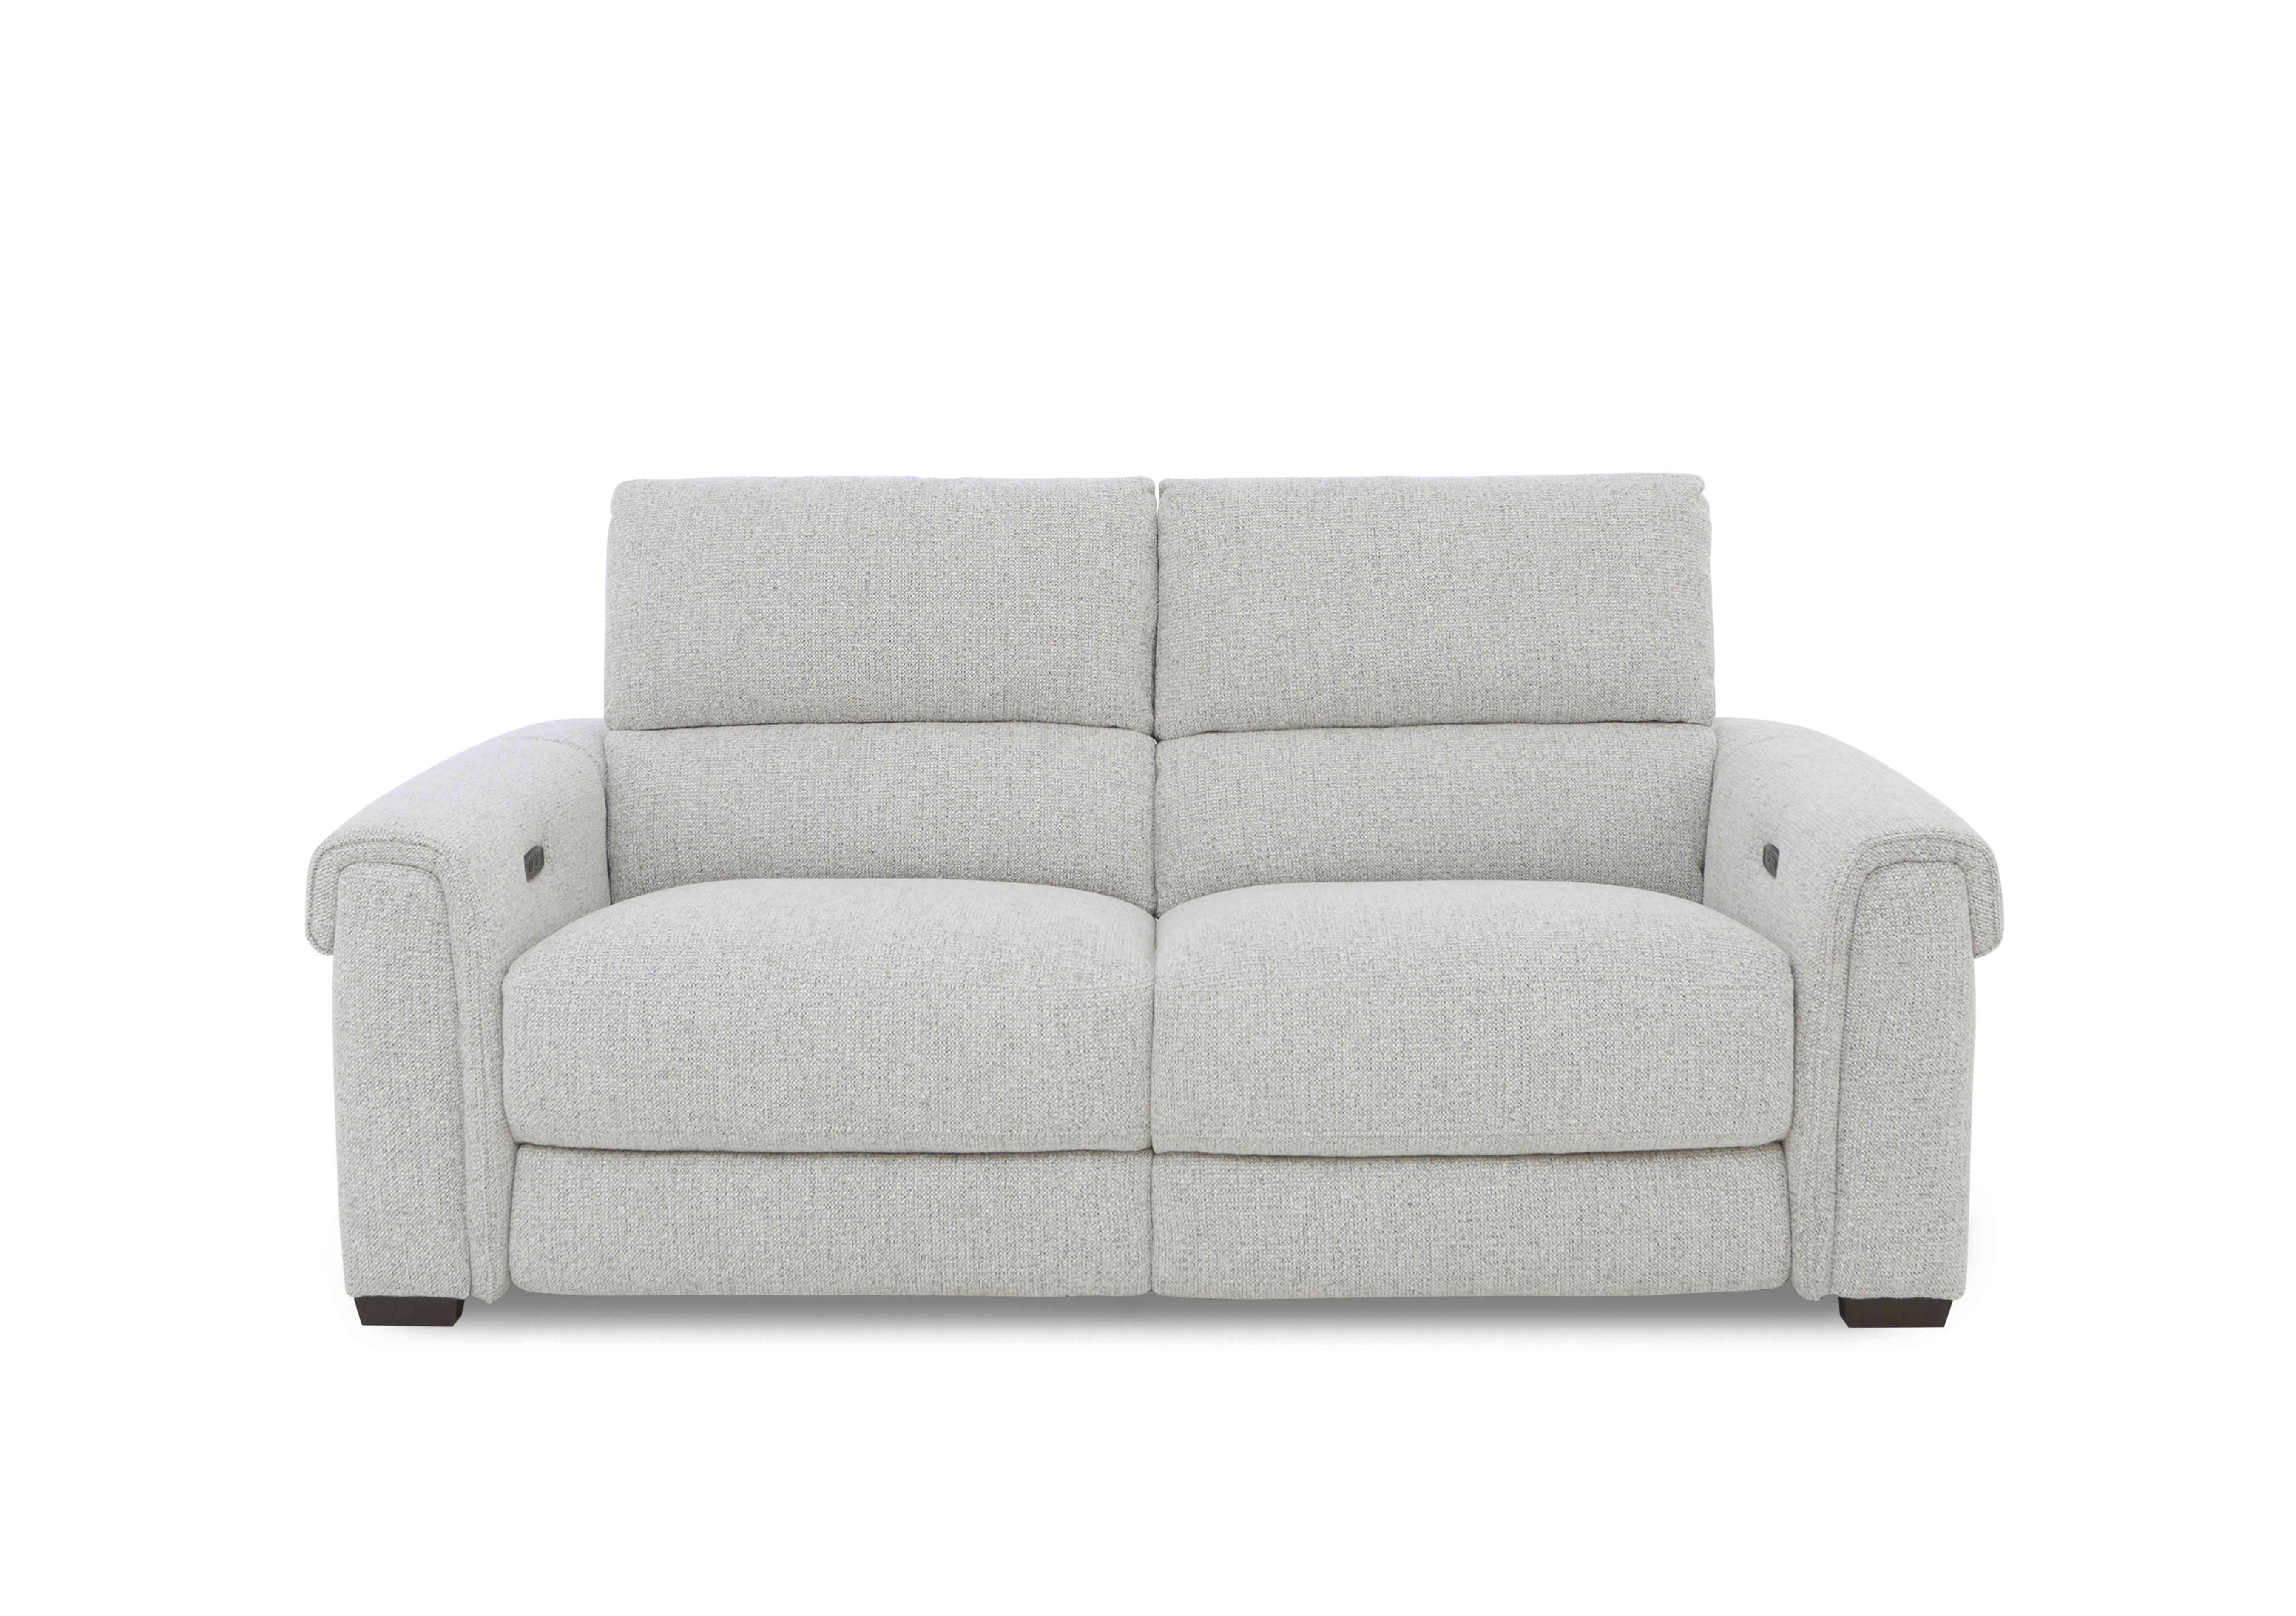 Nixon Fabric 3 Seater Sofa in Fab-Mil-R104 Oyster on Furniture Village